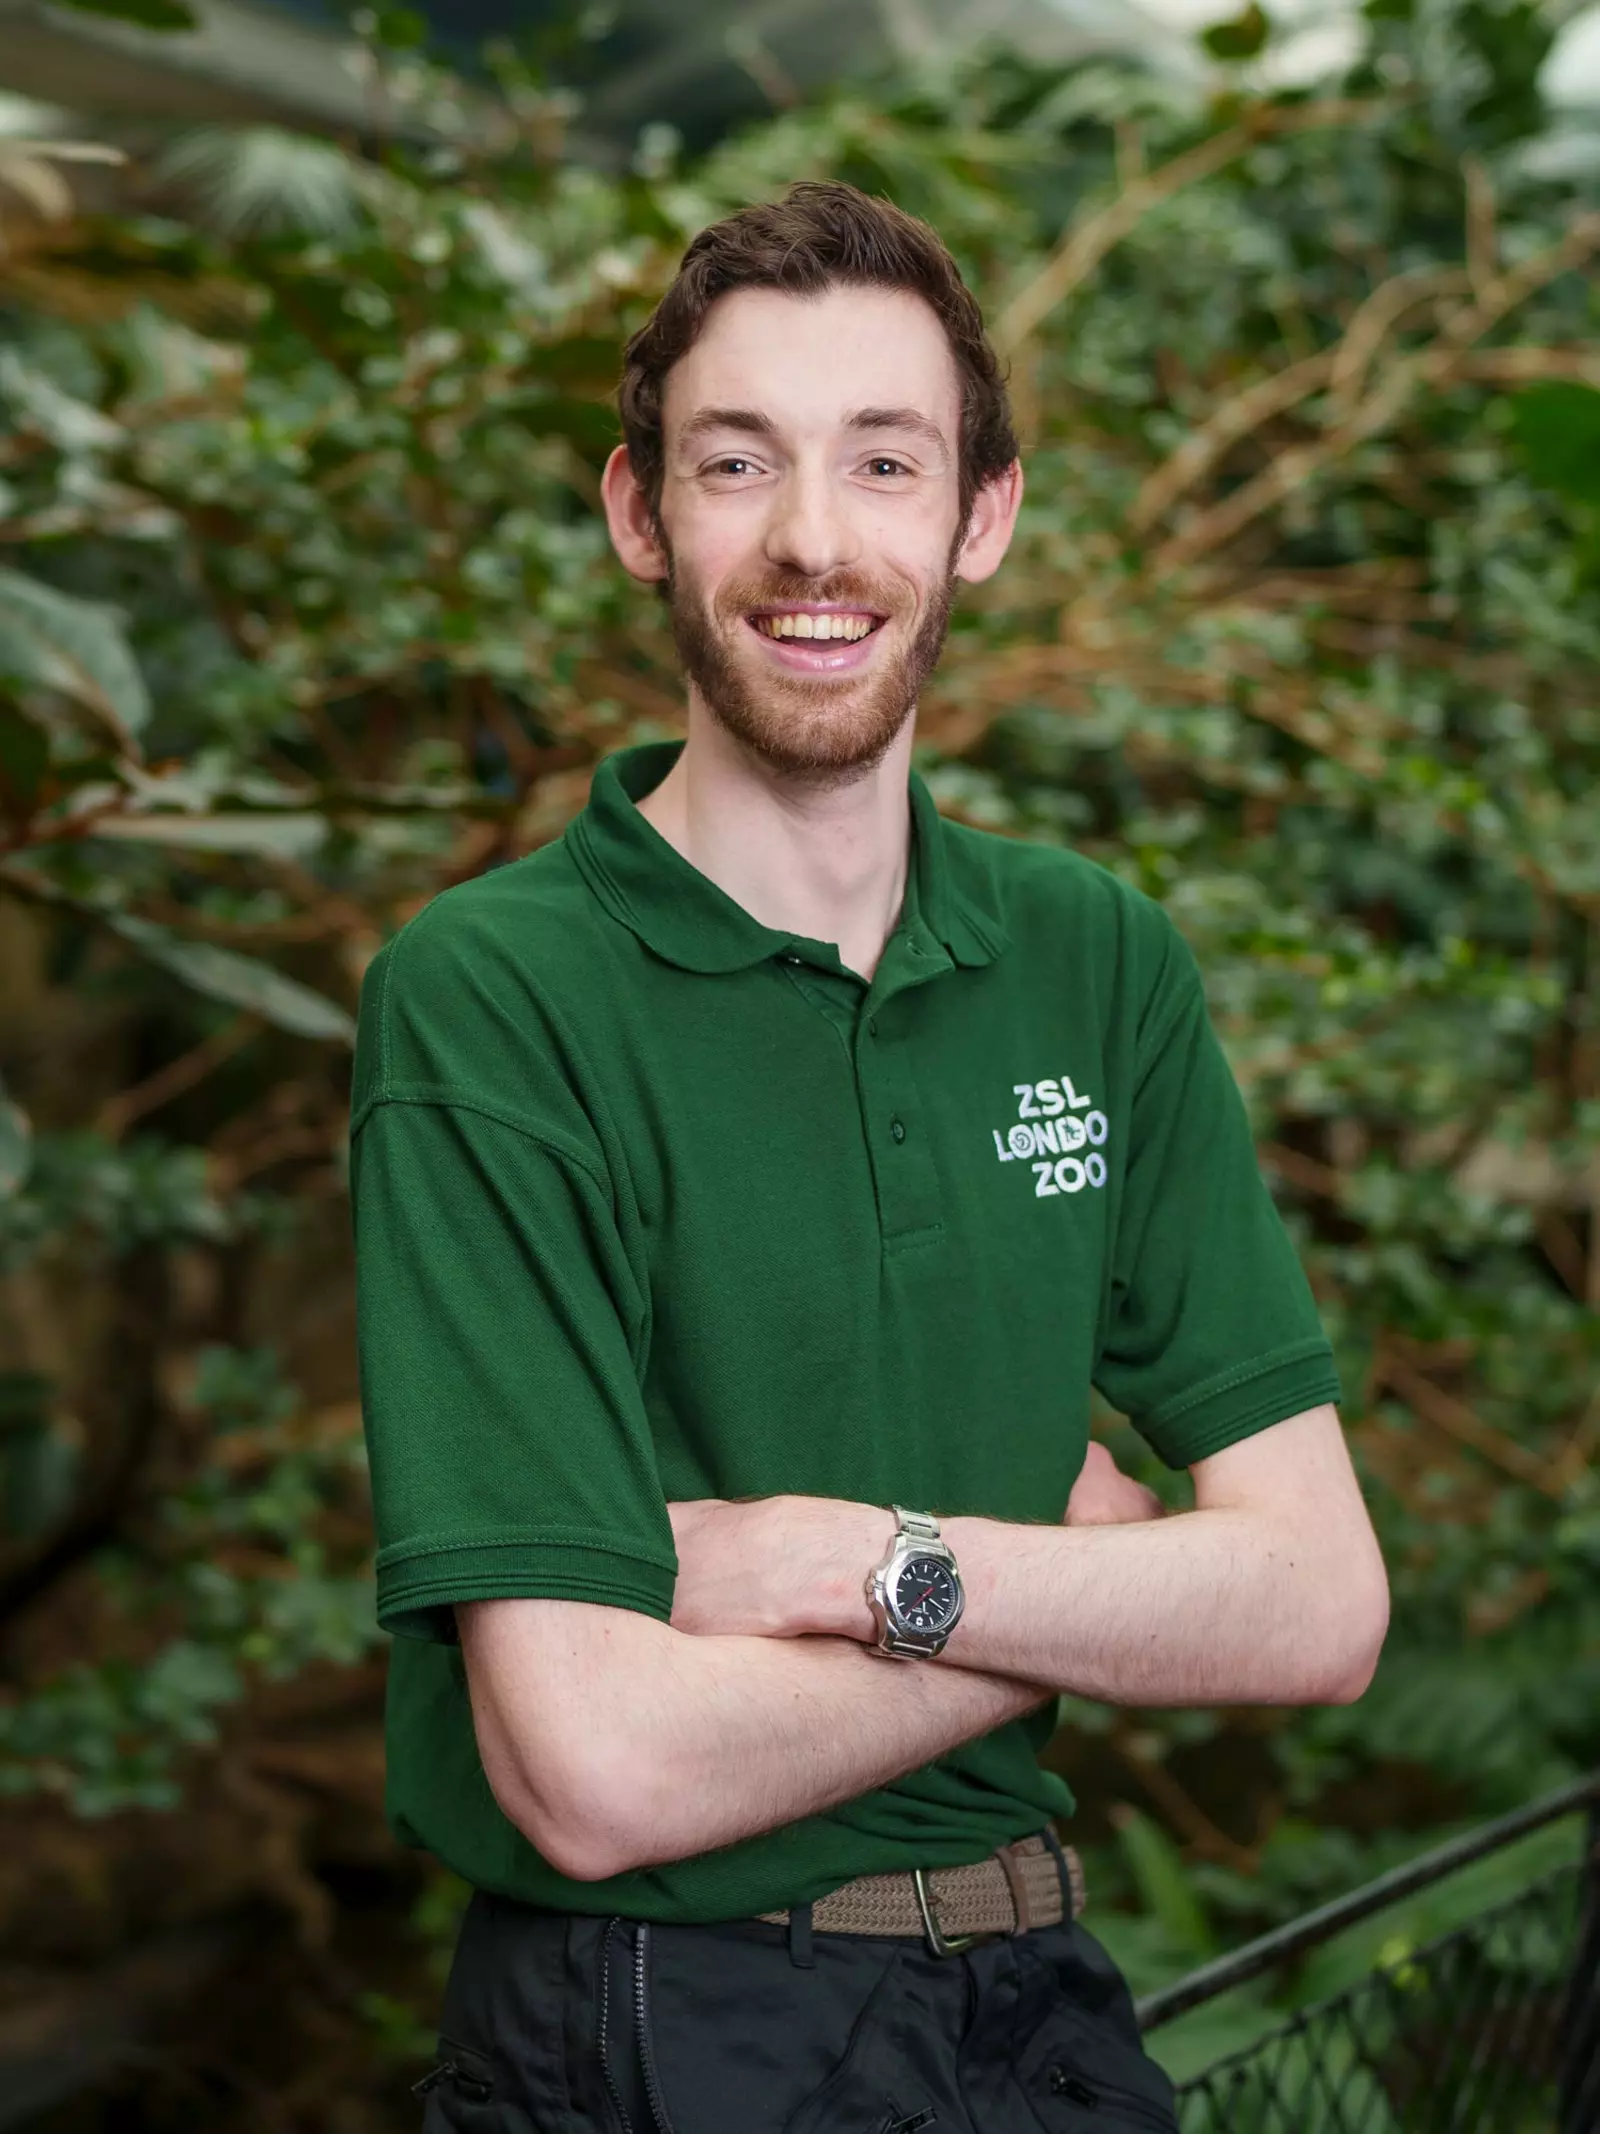 London zoo volunteer in green shirt